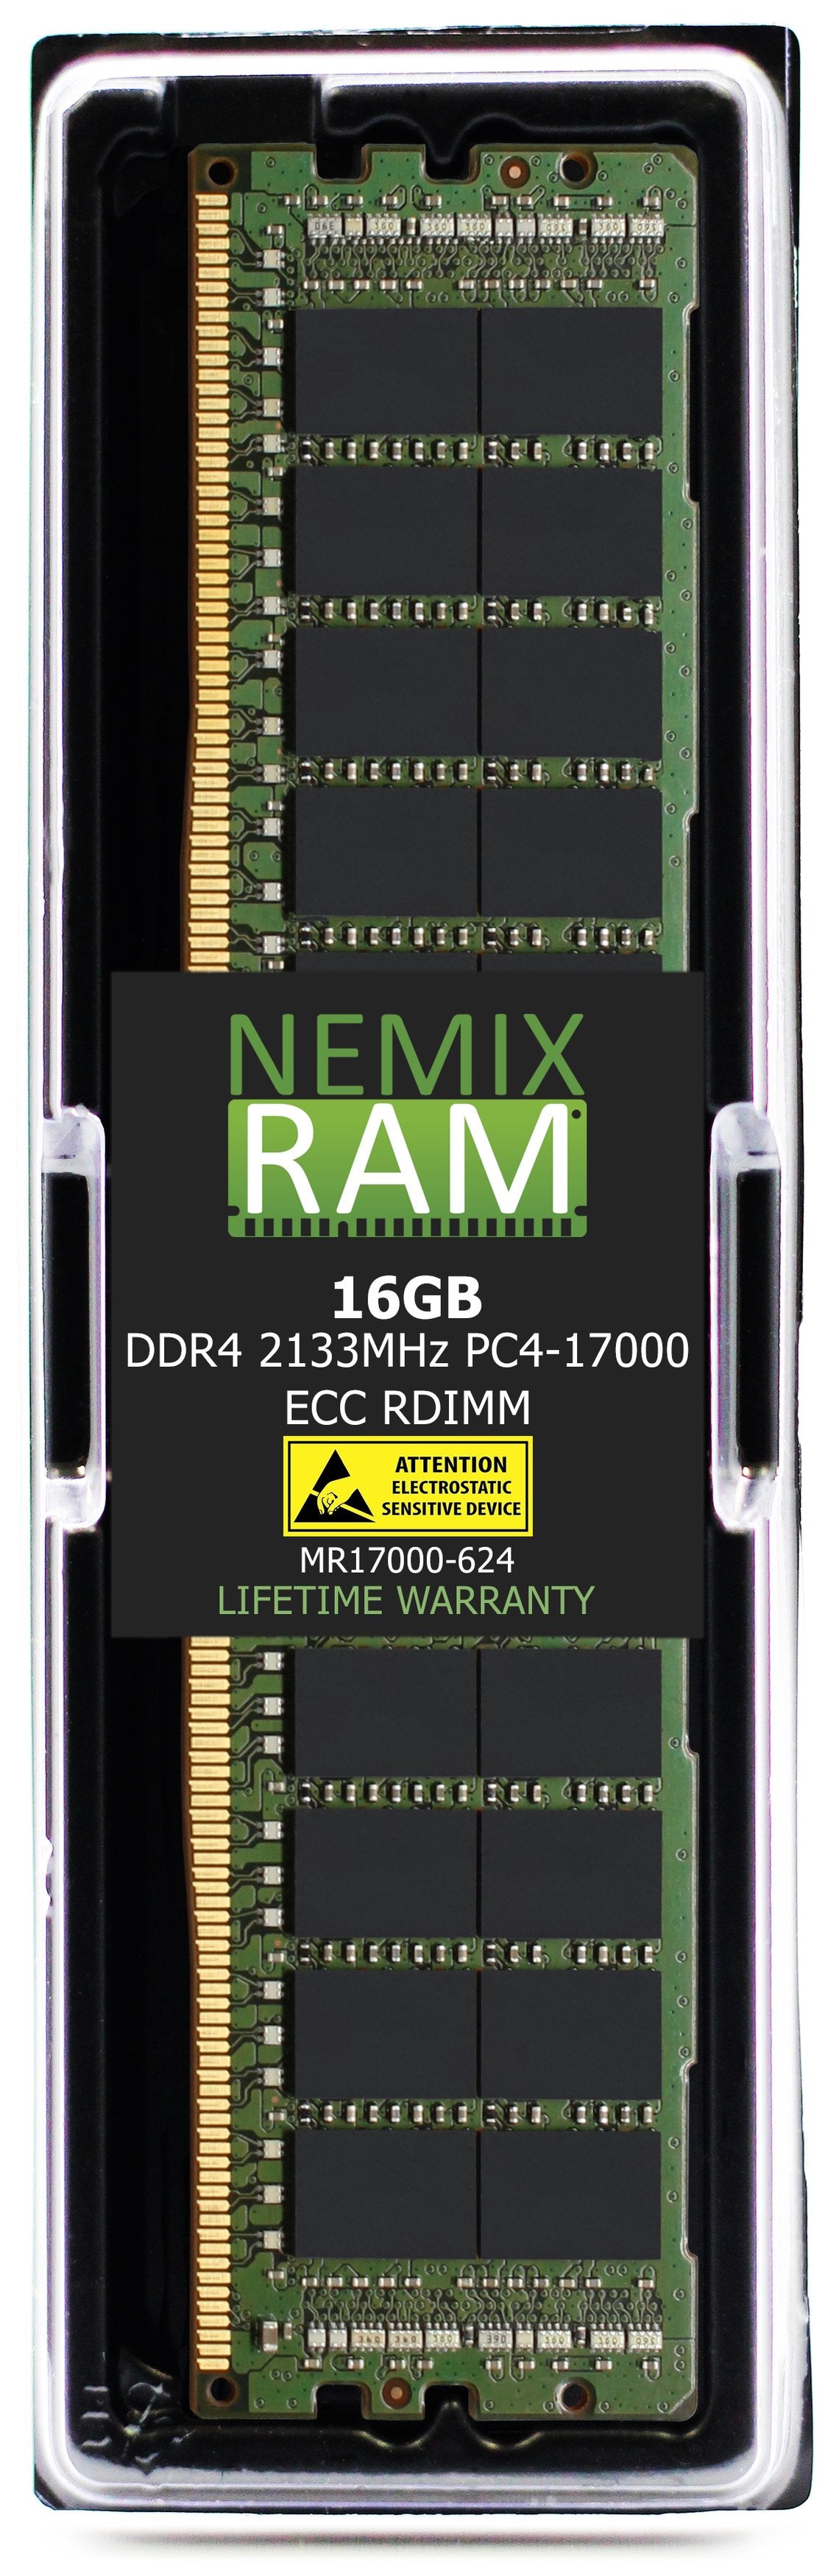 NEC Express5800 E120f-M Memory Module N8102-628F 16GB DDR4 2133MHZ PC4-17000 RDIMM